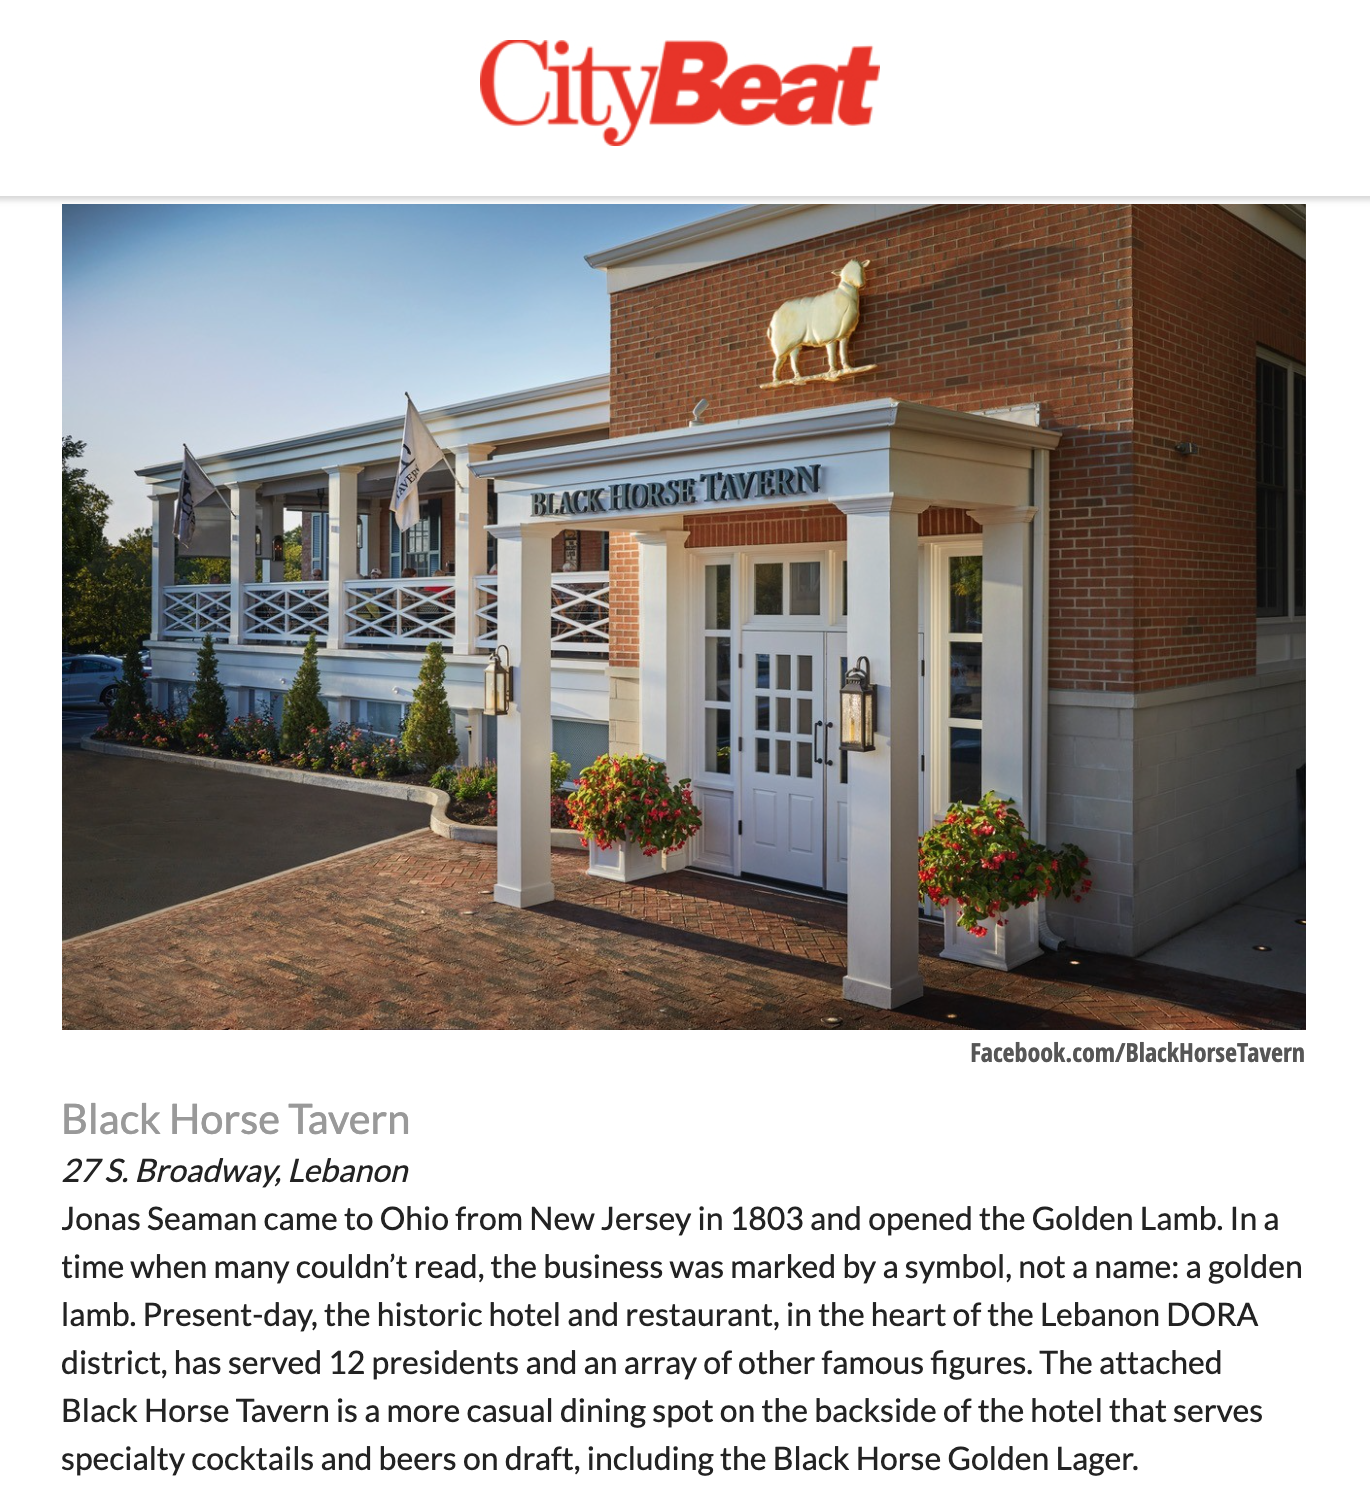 CityBeat features Black Horse Tavern